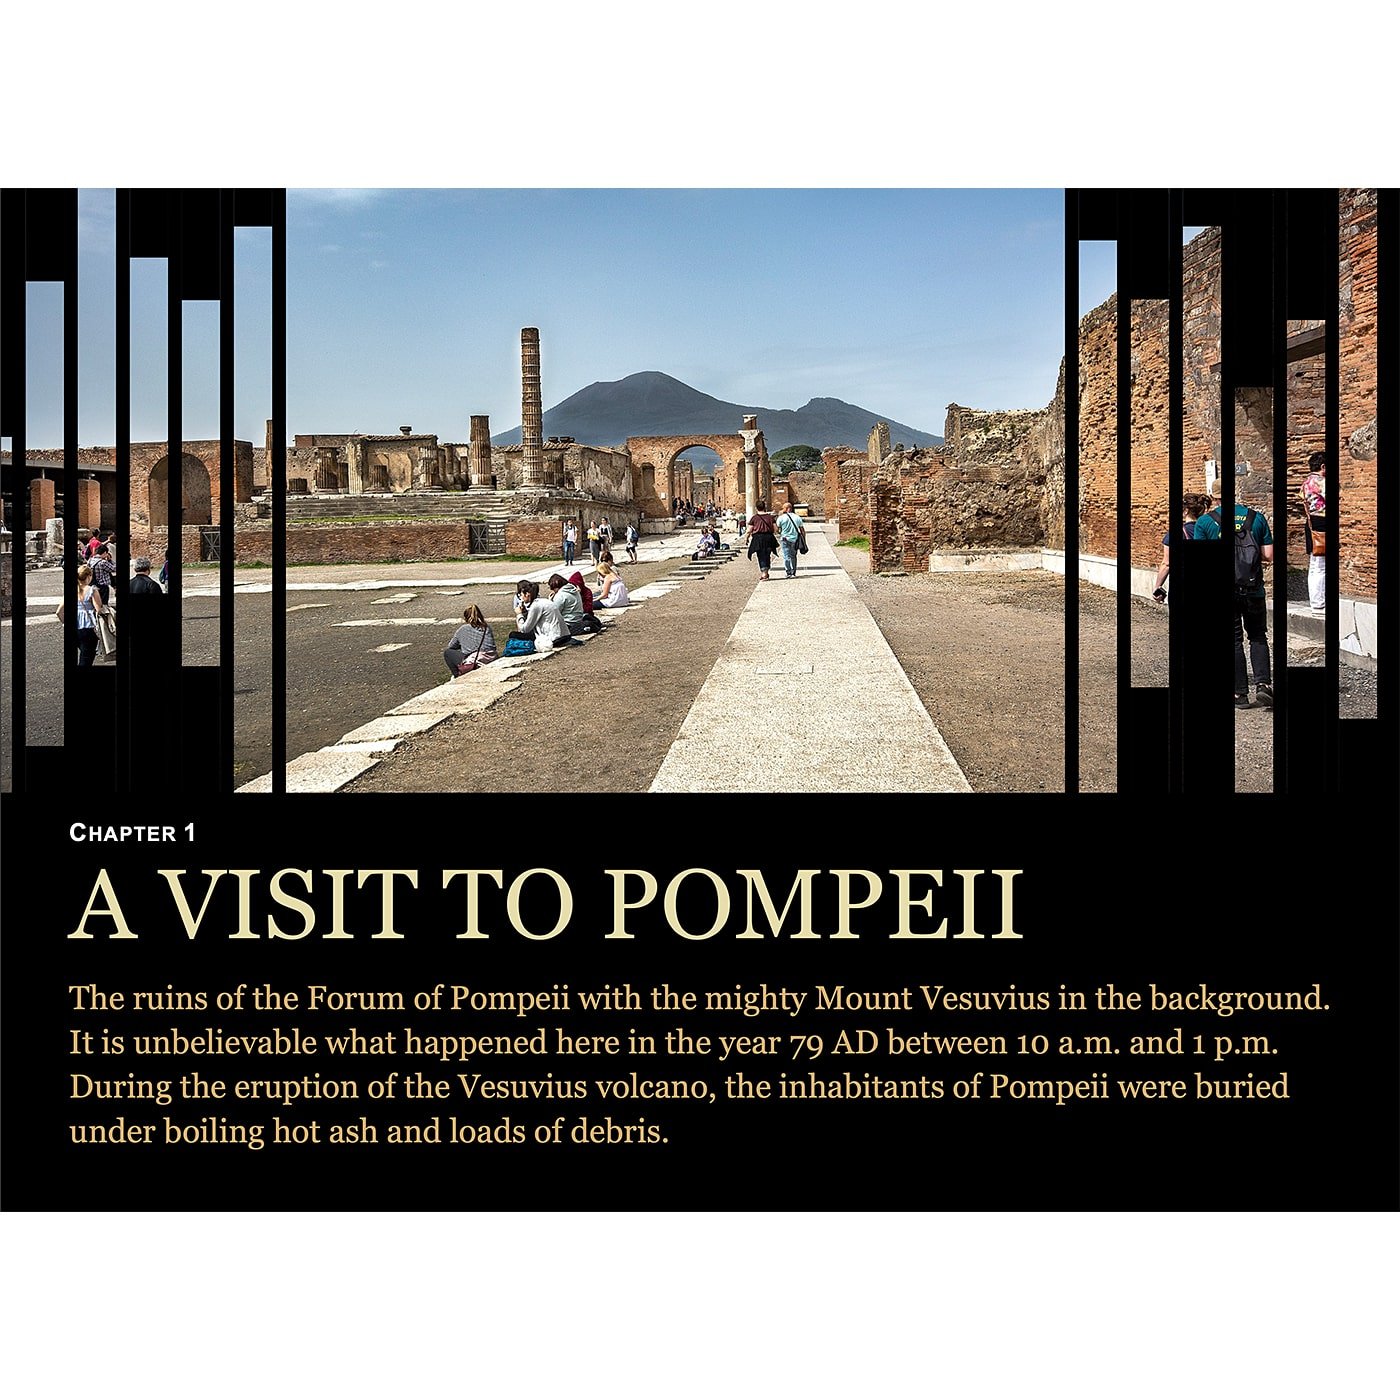 Pompei2_JohnVijlbrief-min.jpg